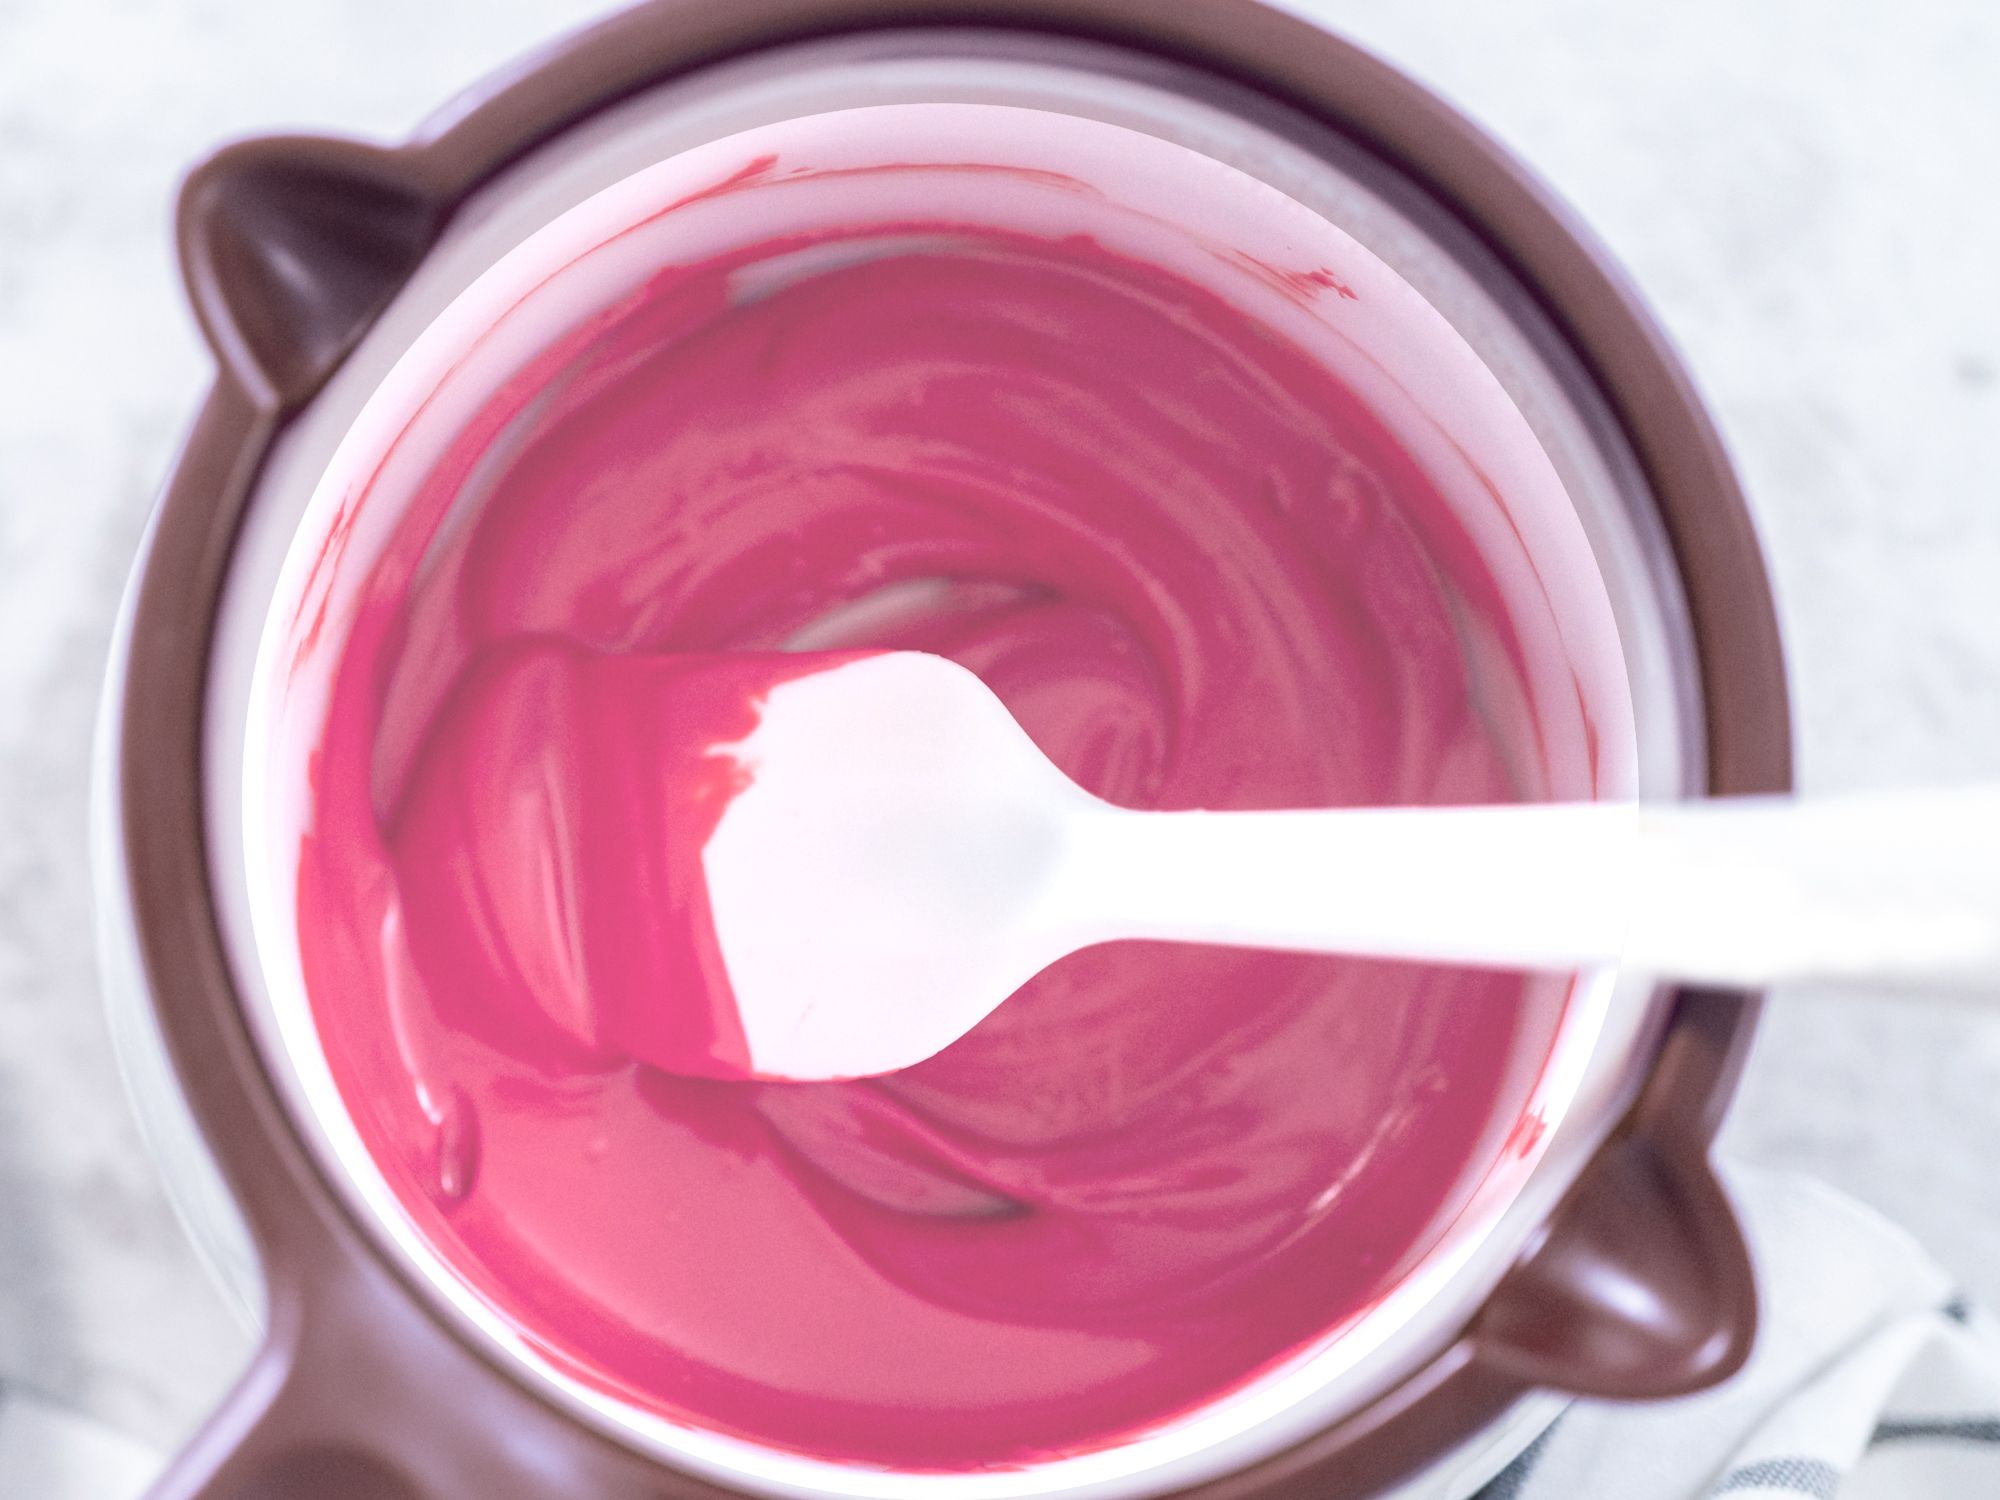 Bunte Candy Melts Glasur Aroma 250g Pink schmelzen